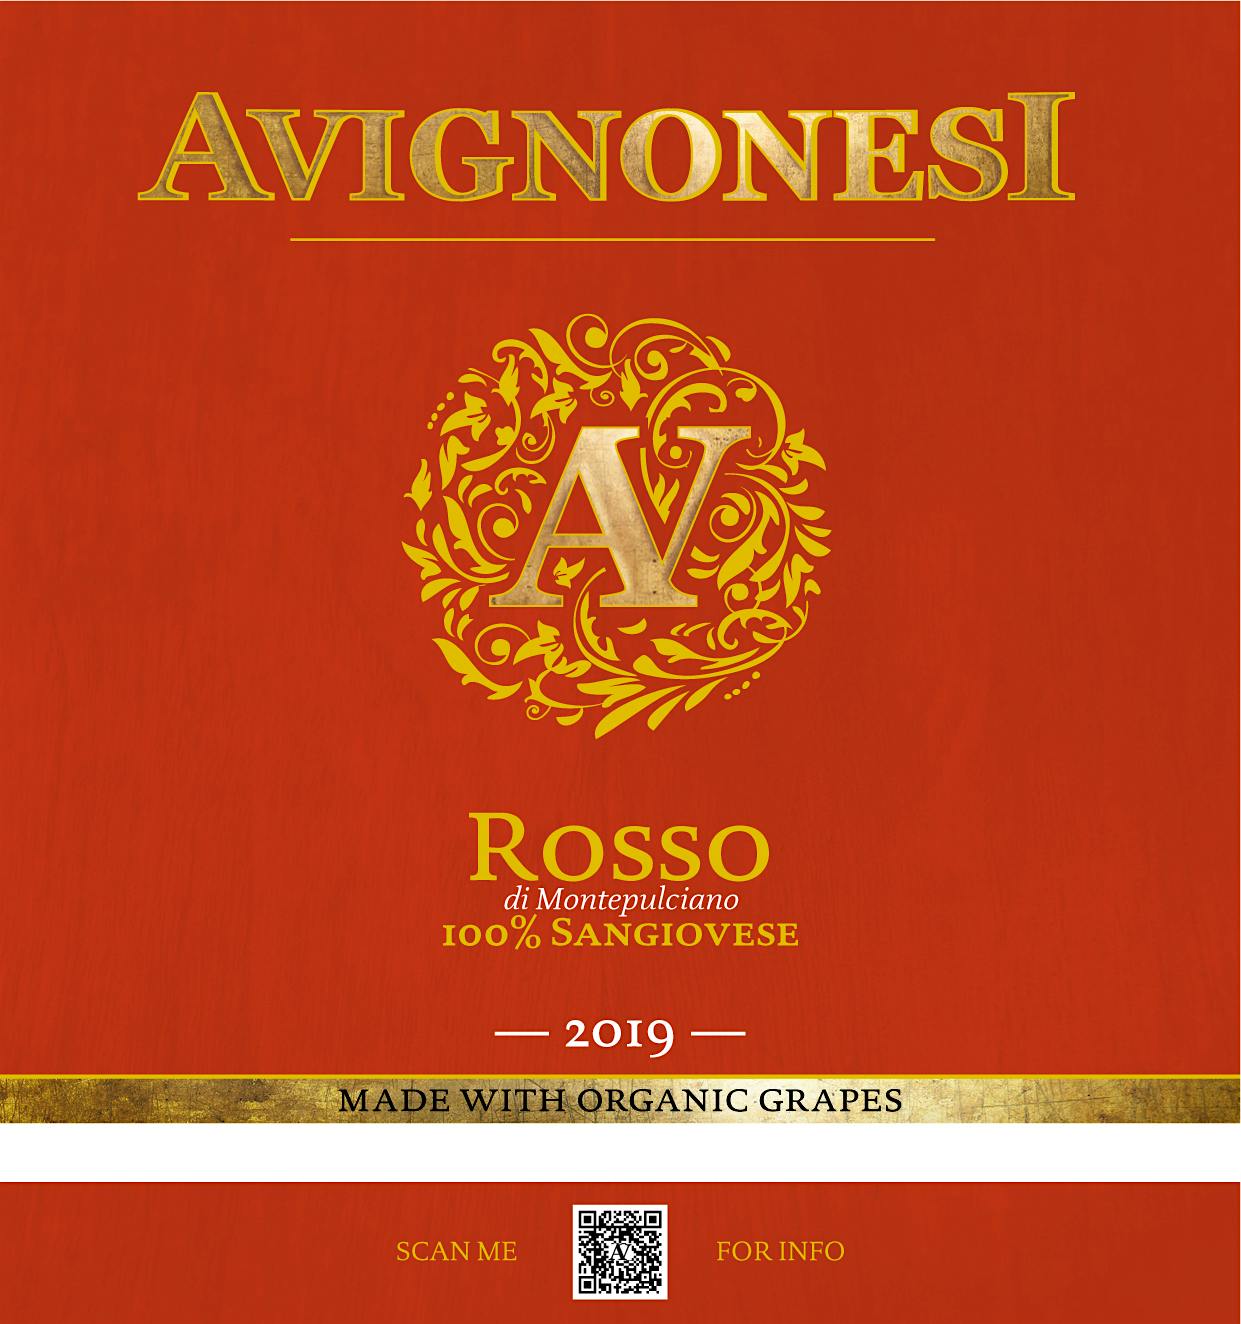 Label for Avignonesi